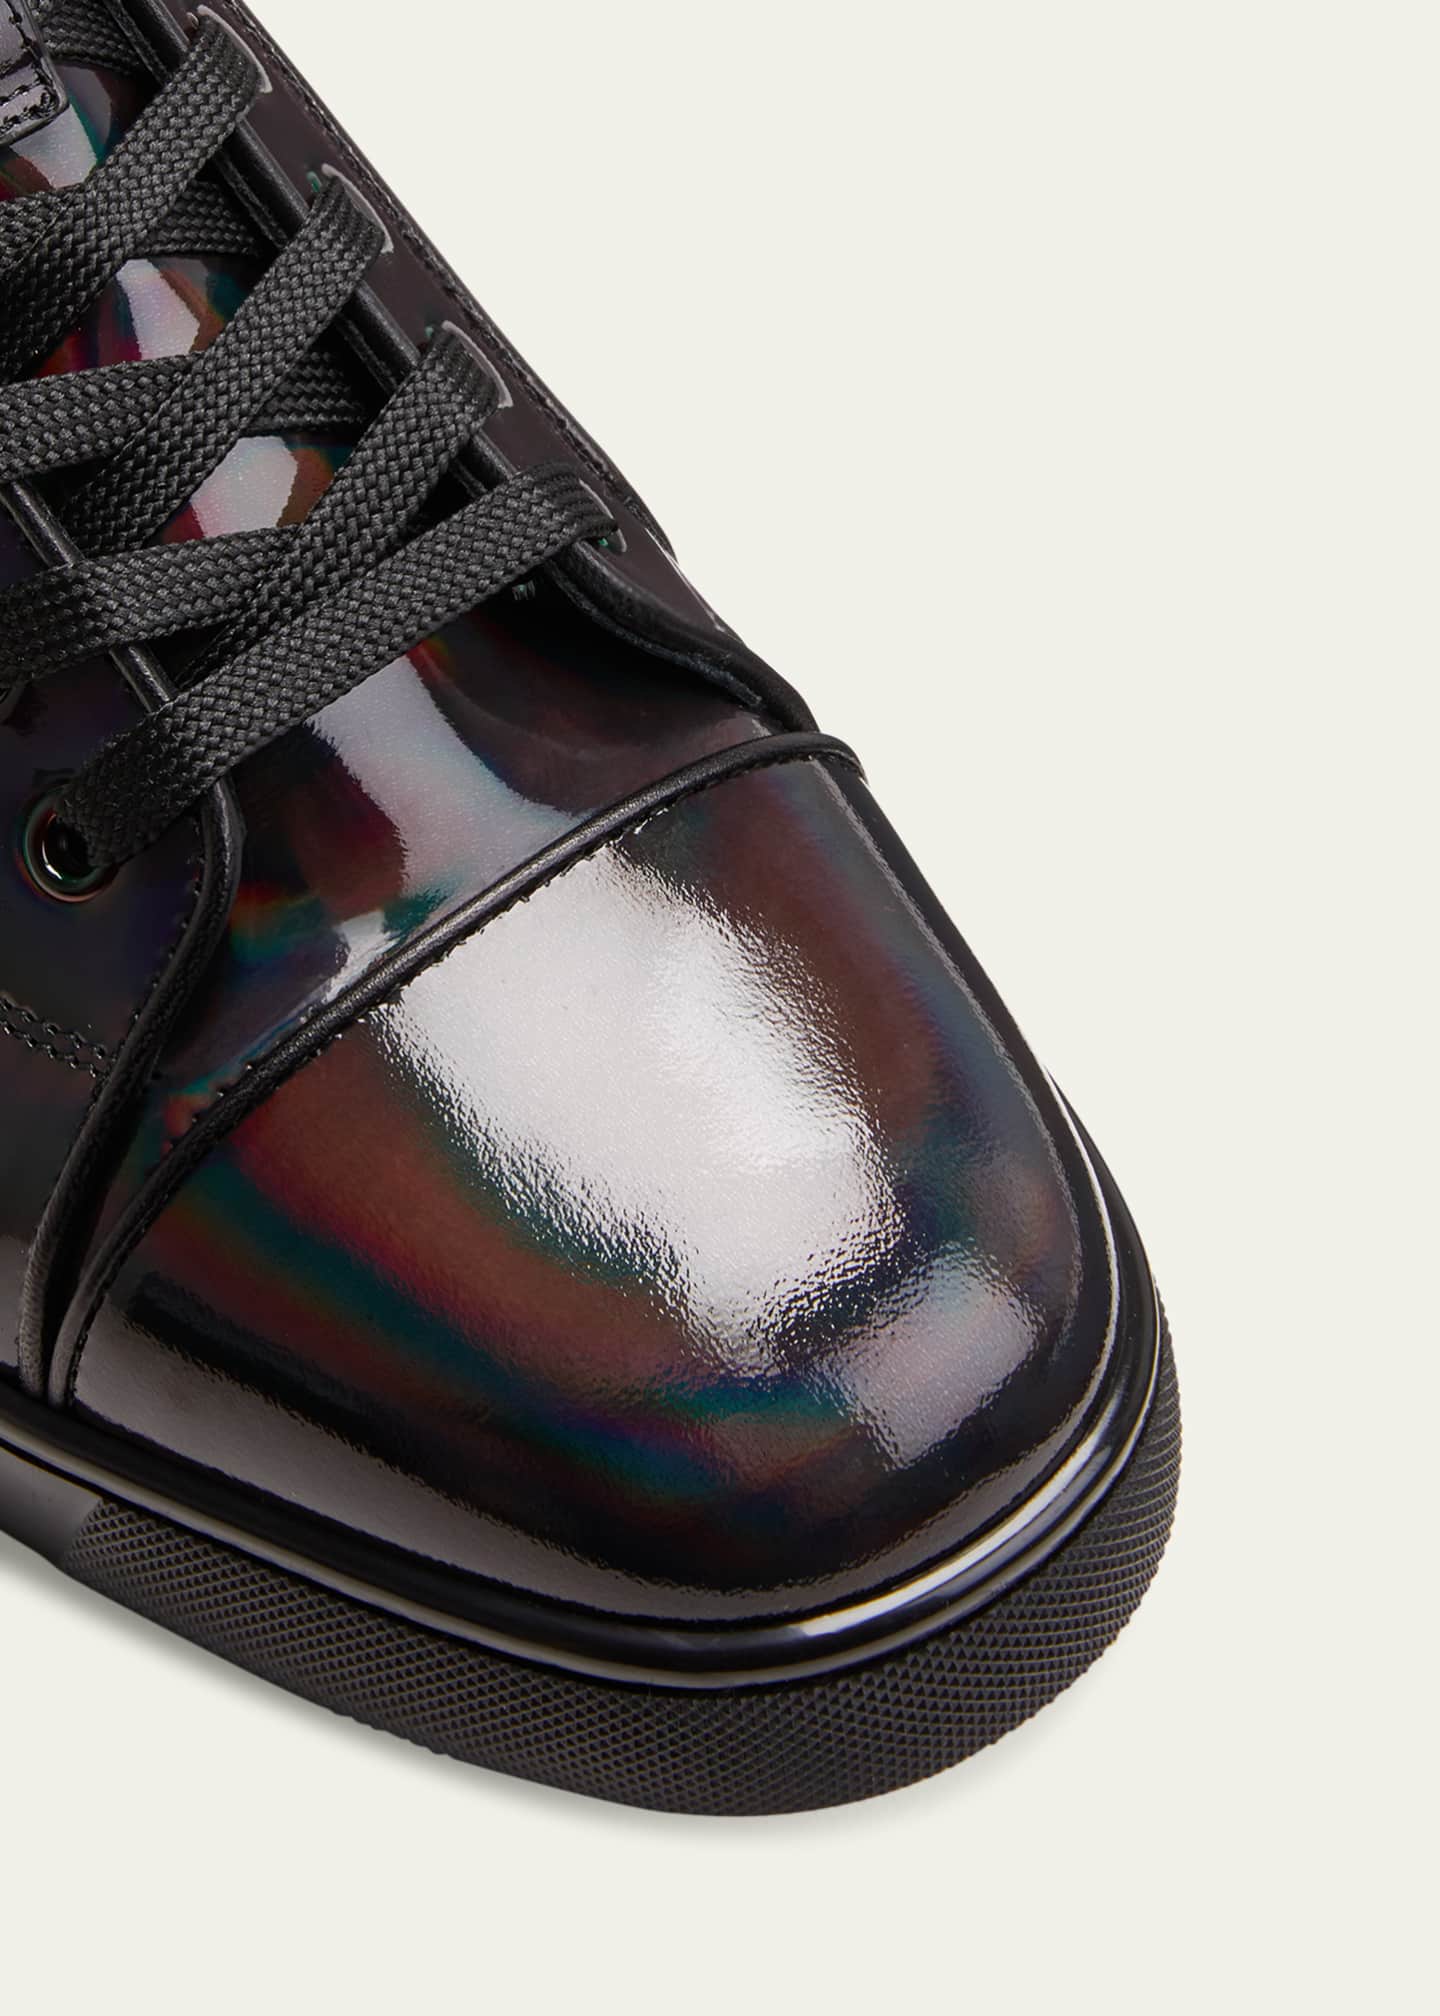 Christian Louboutin, Shoes, Christian Louboutin Mens Sneaker